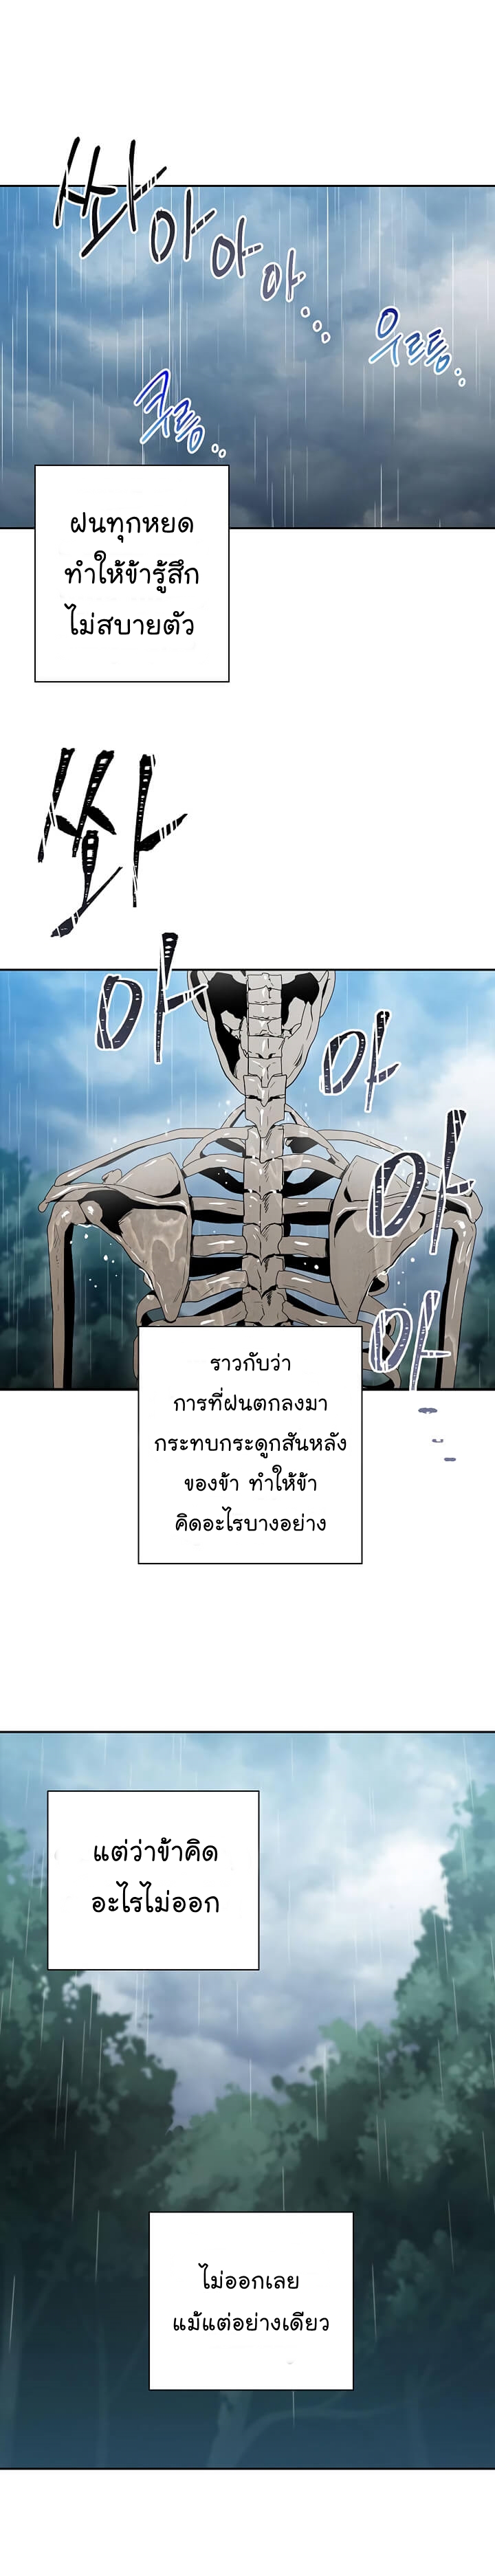 Skeleton Soldier 88 22